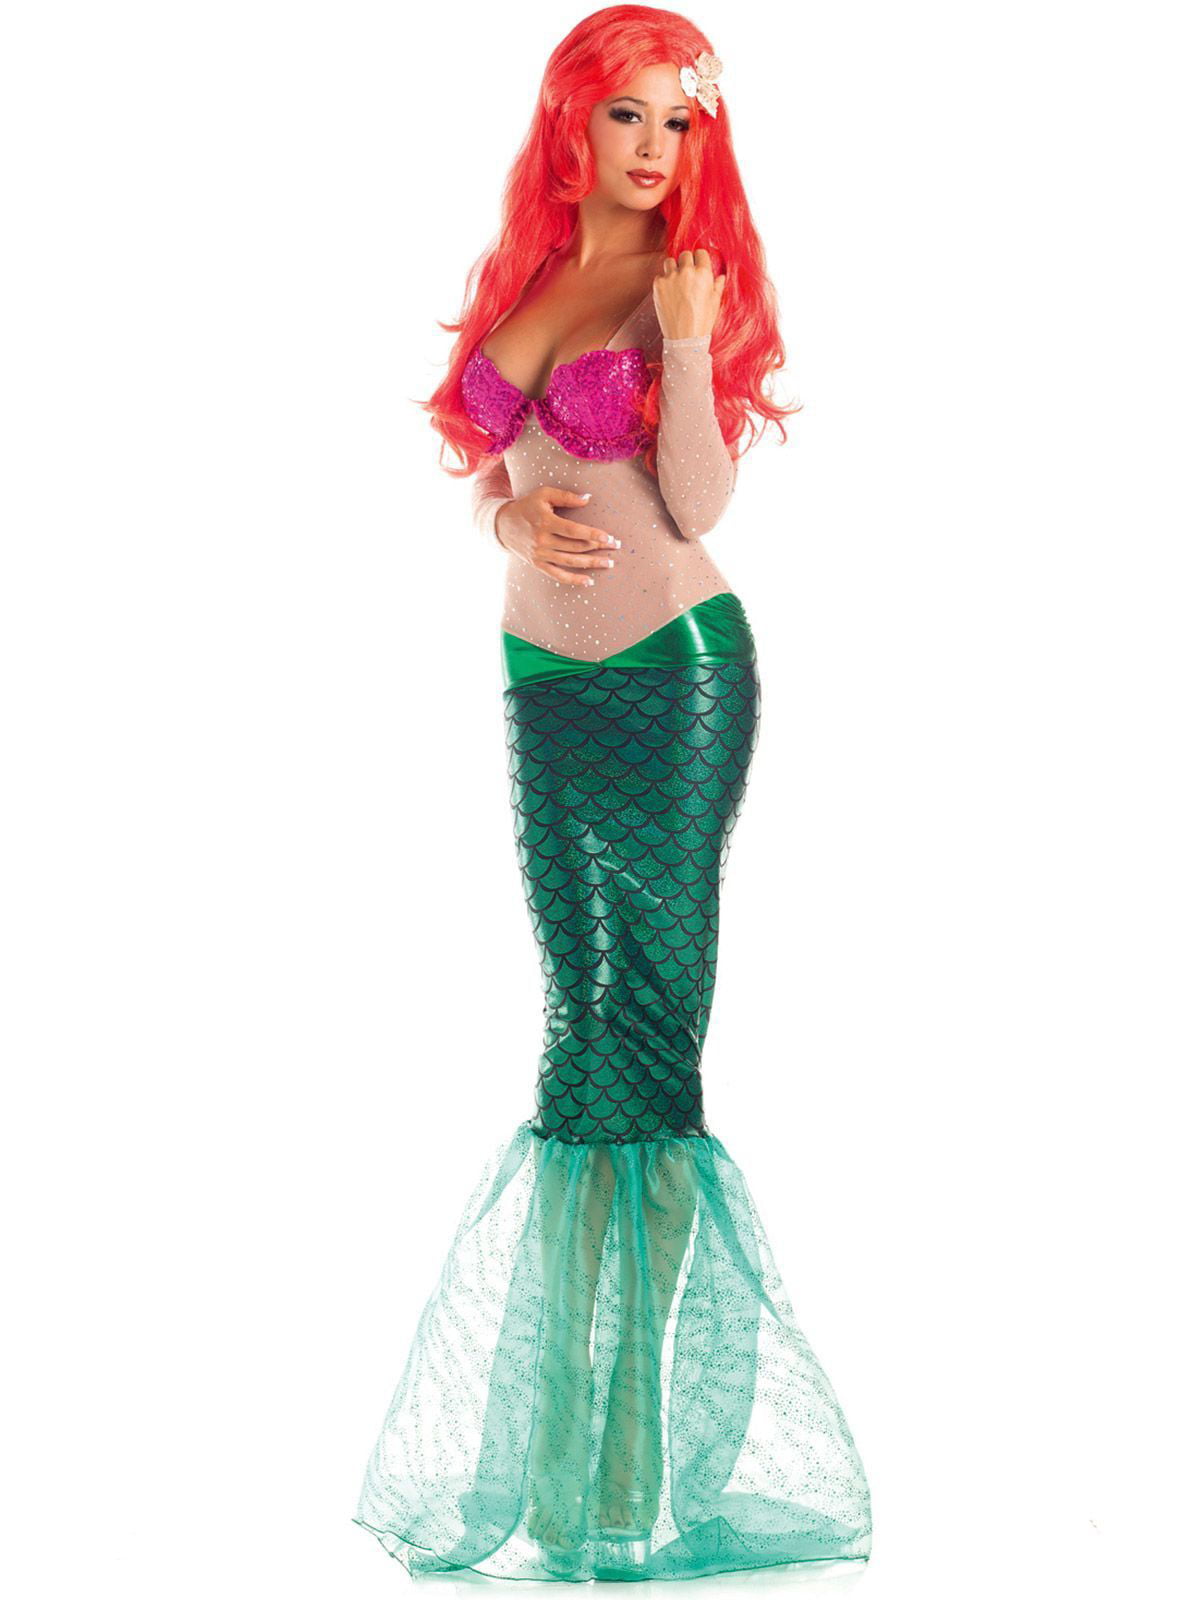 homemade adult mermaid costumes Sex Pics Hd